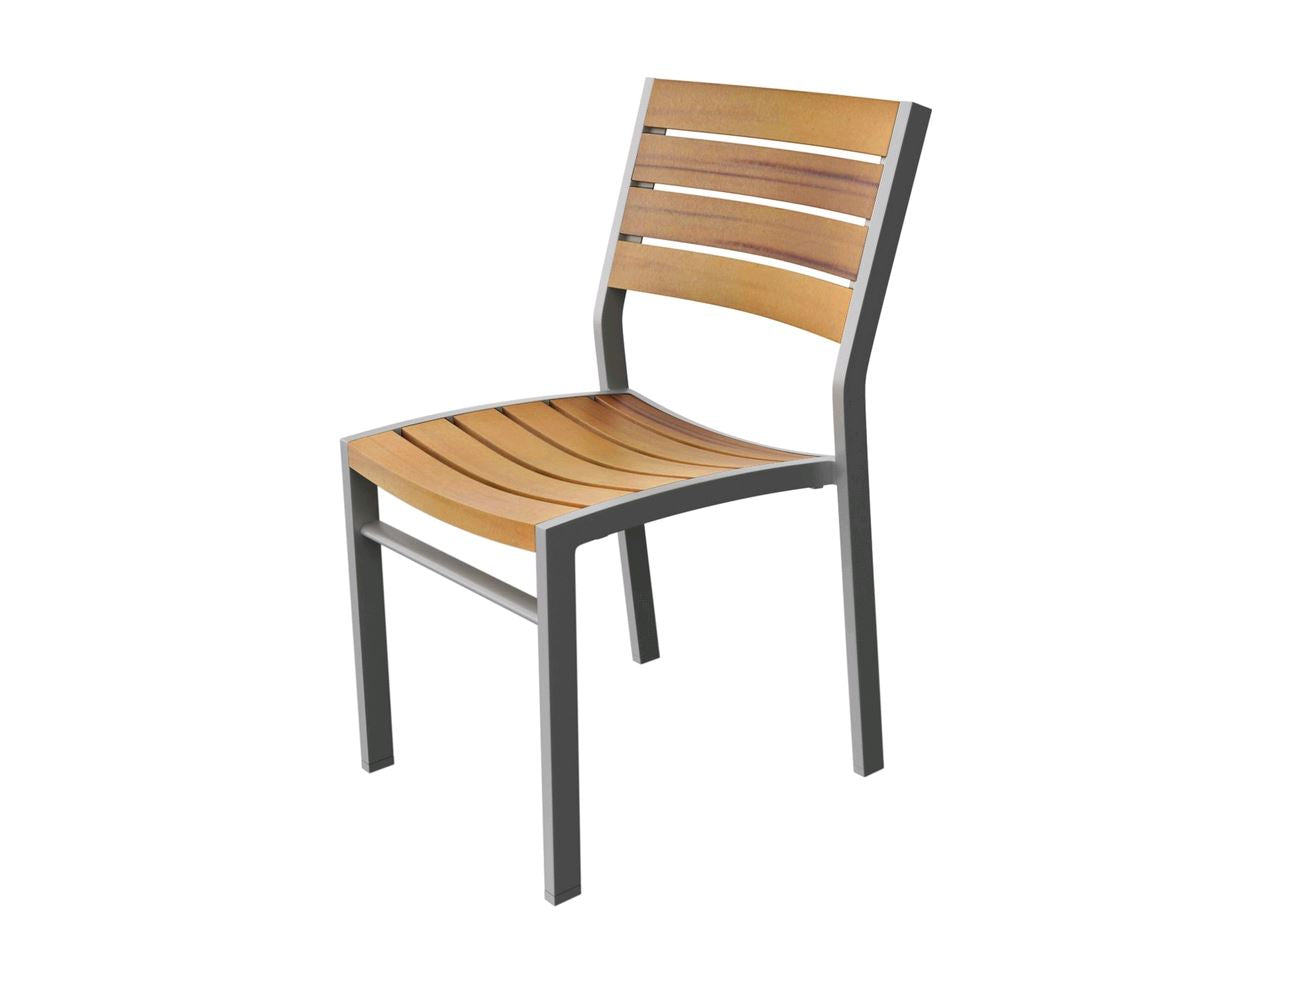 Tarrison Ace Side Chair ASG3701xxxx